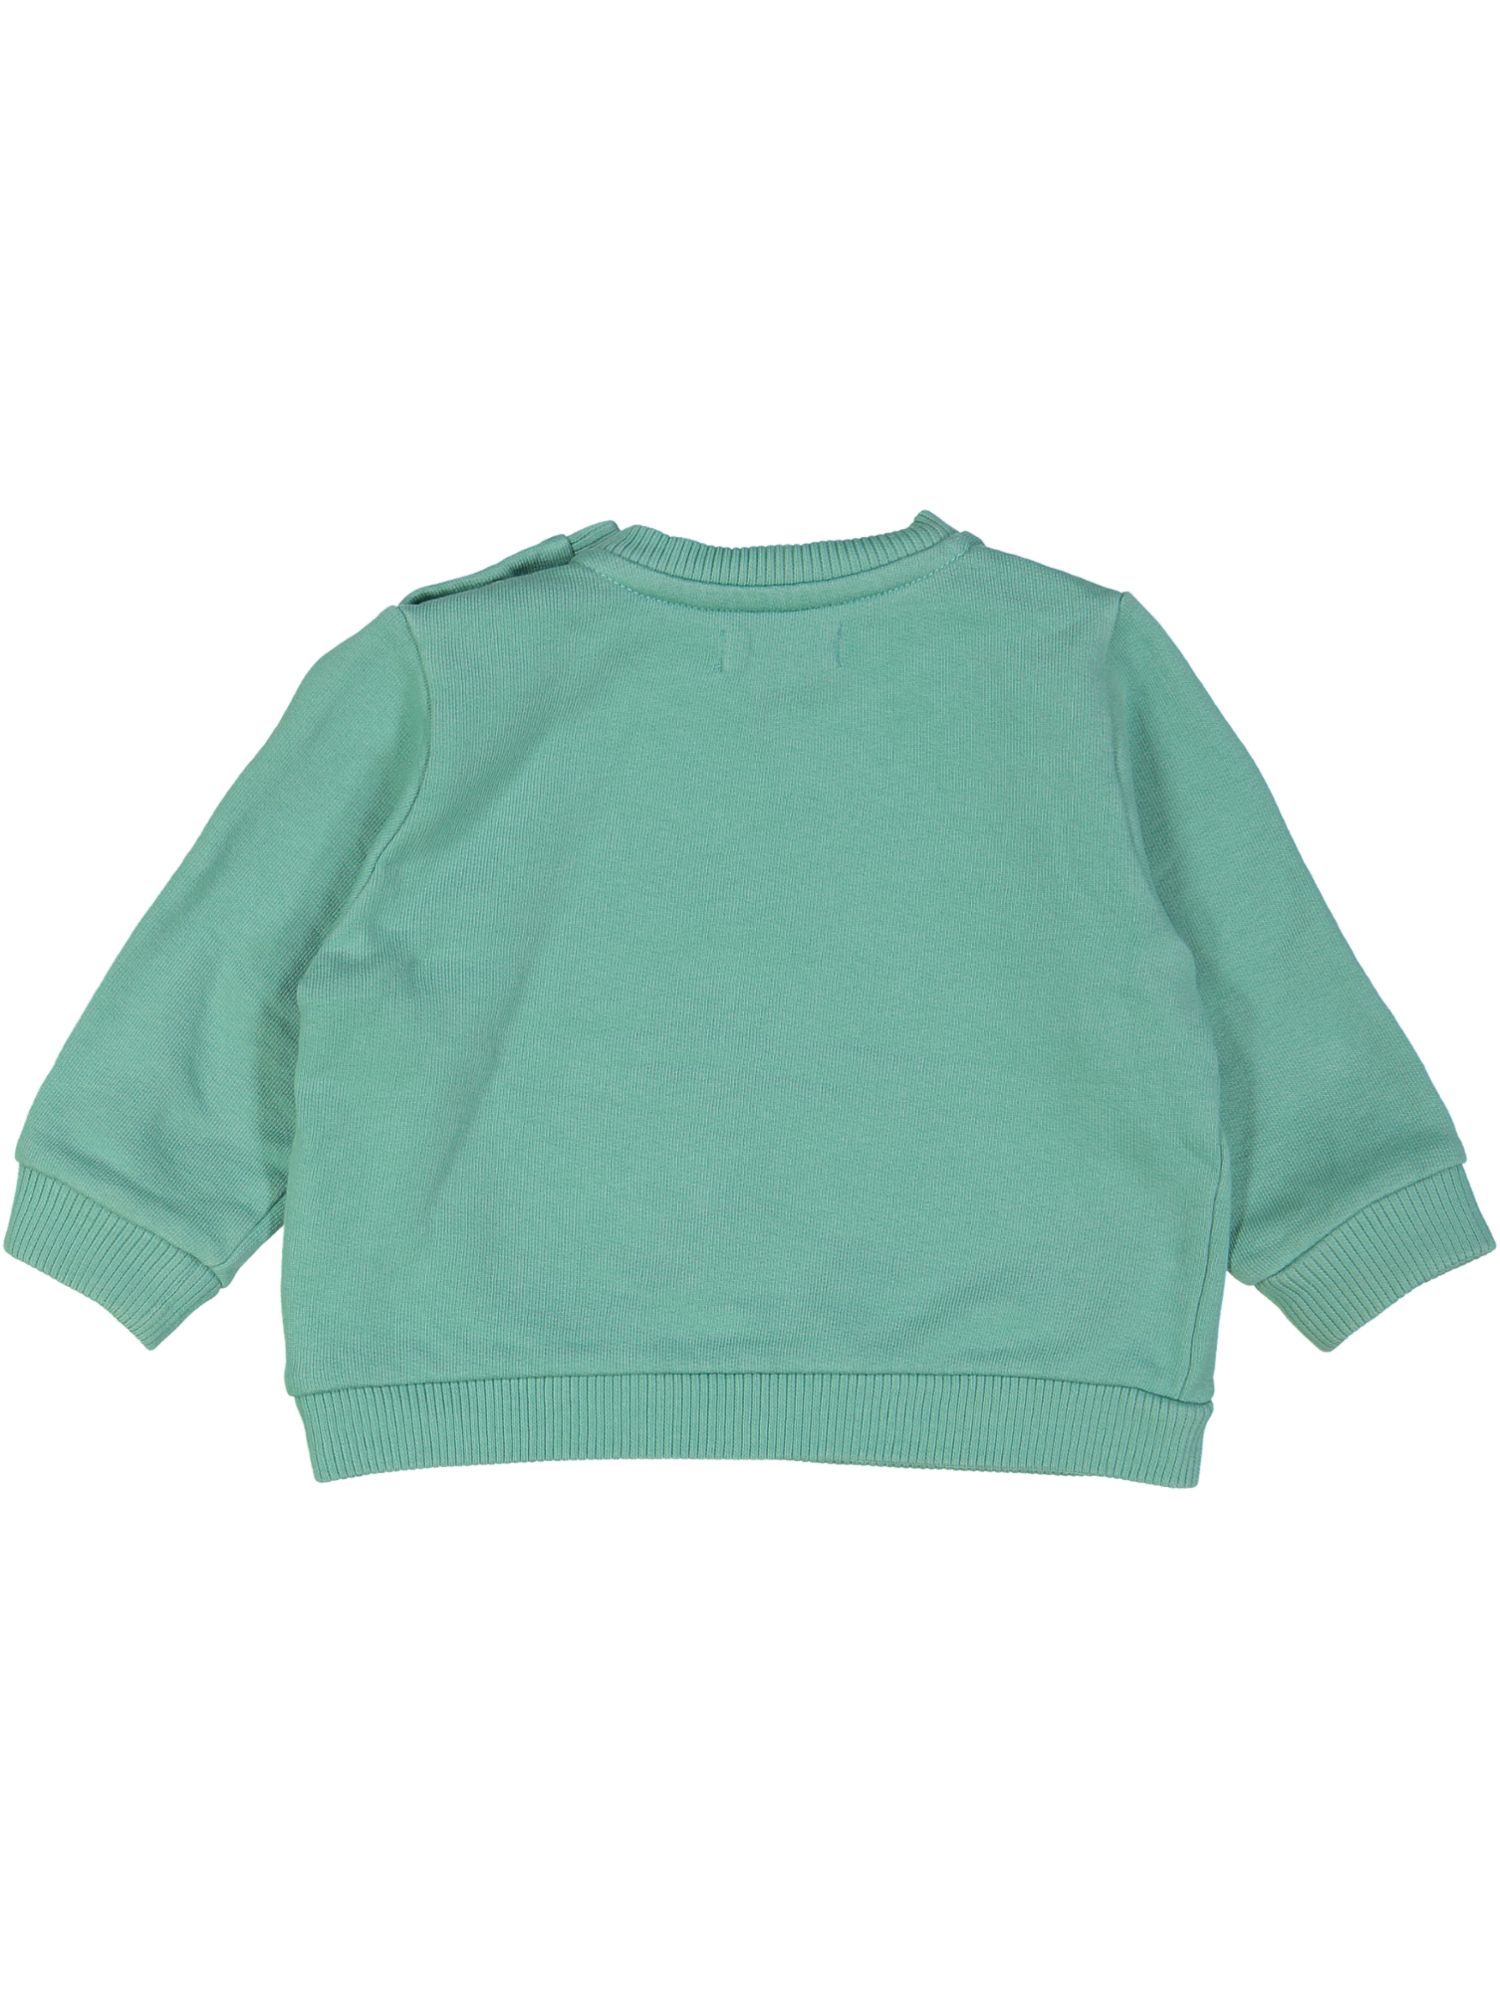 sweater groen hahahaha 06m